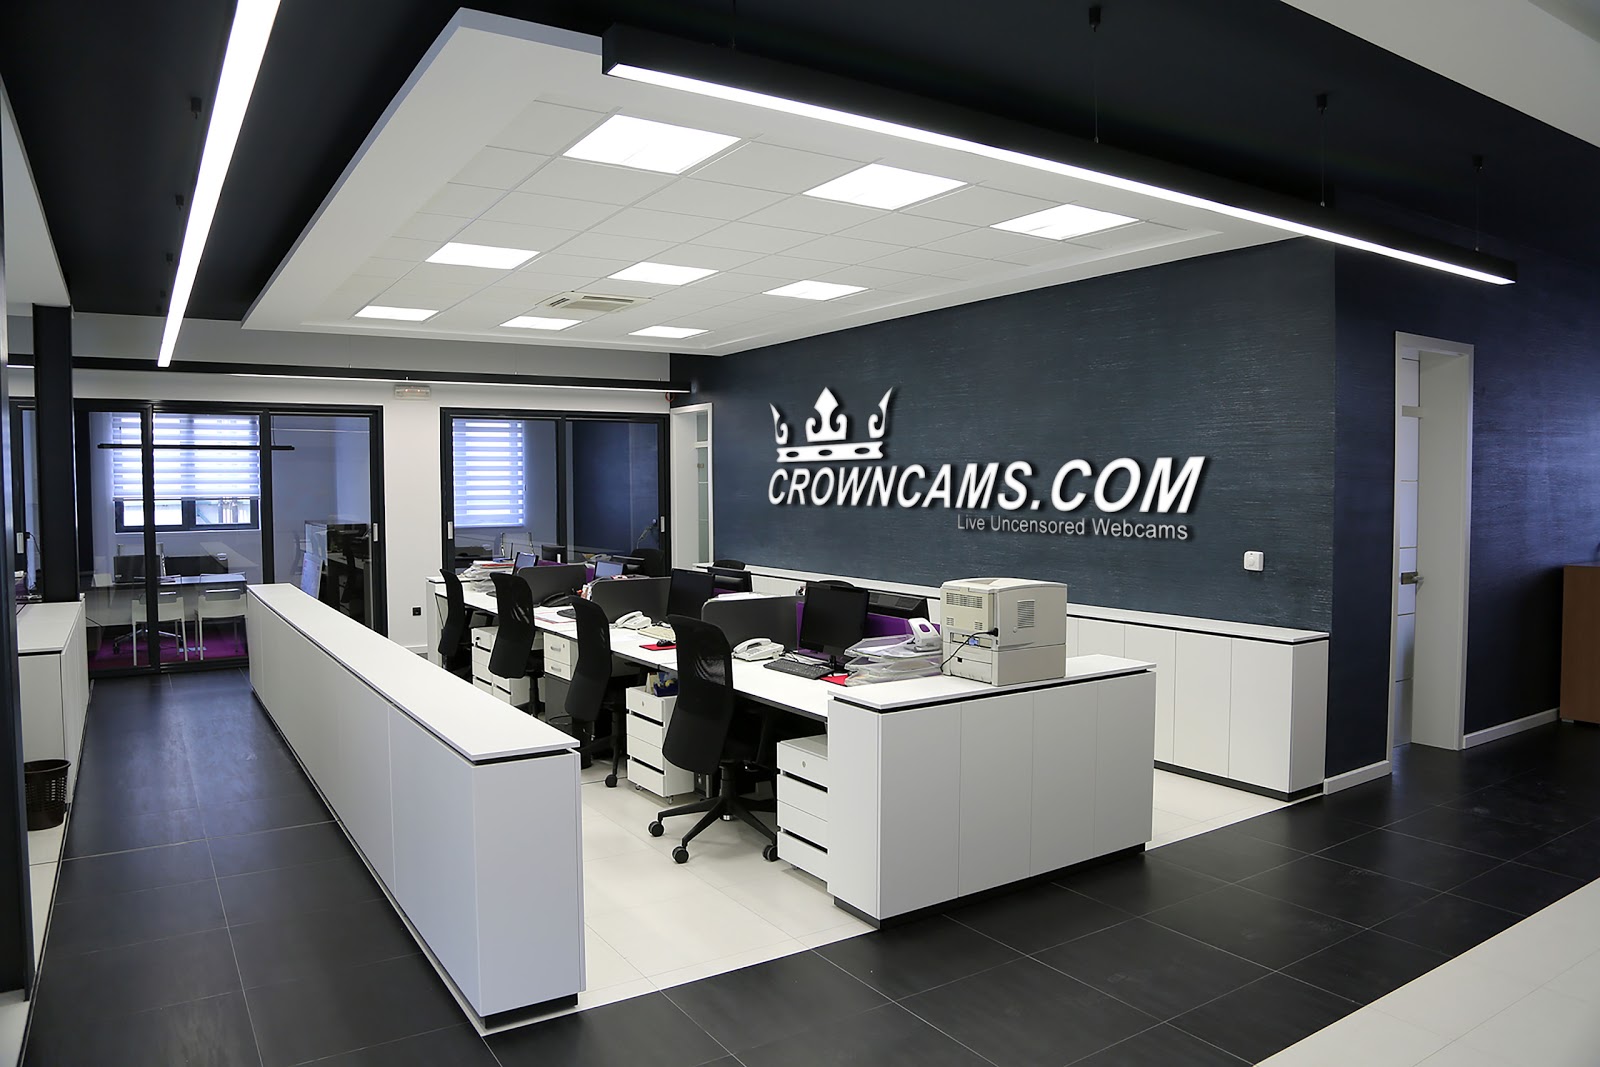 CrownCams.com